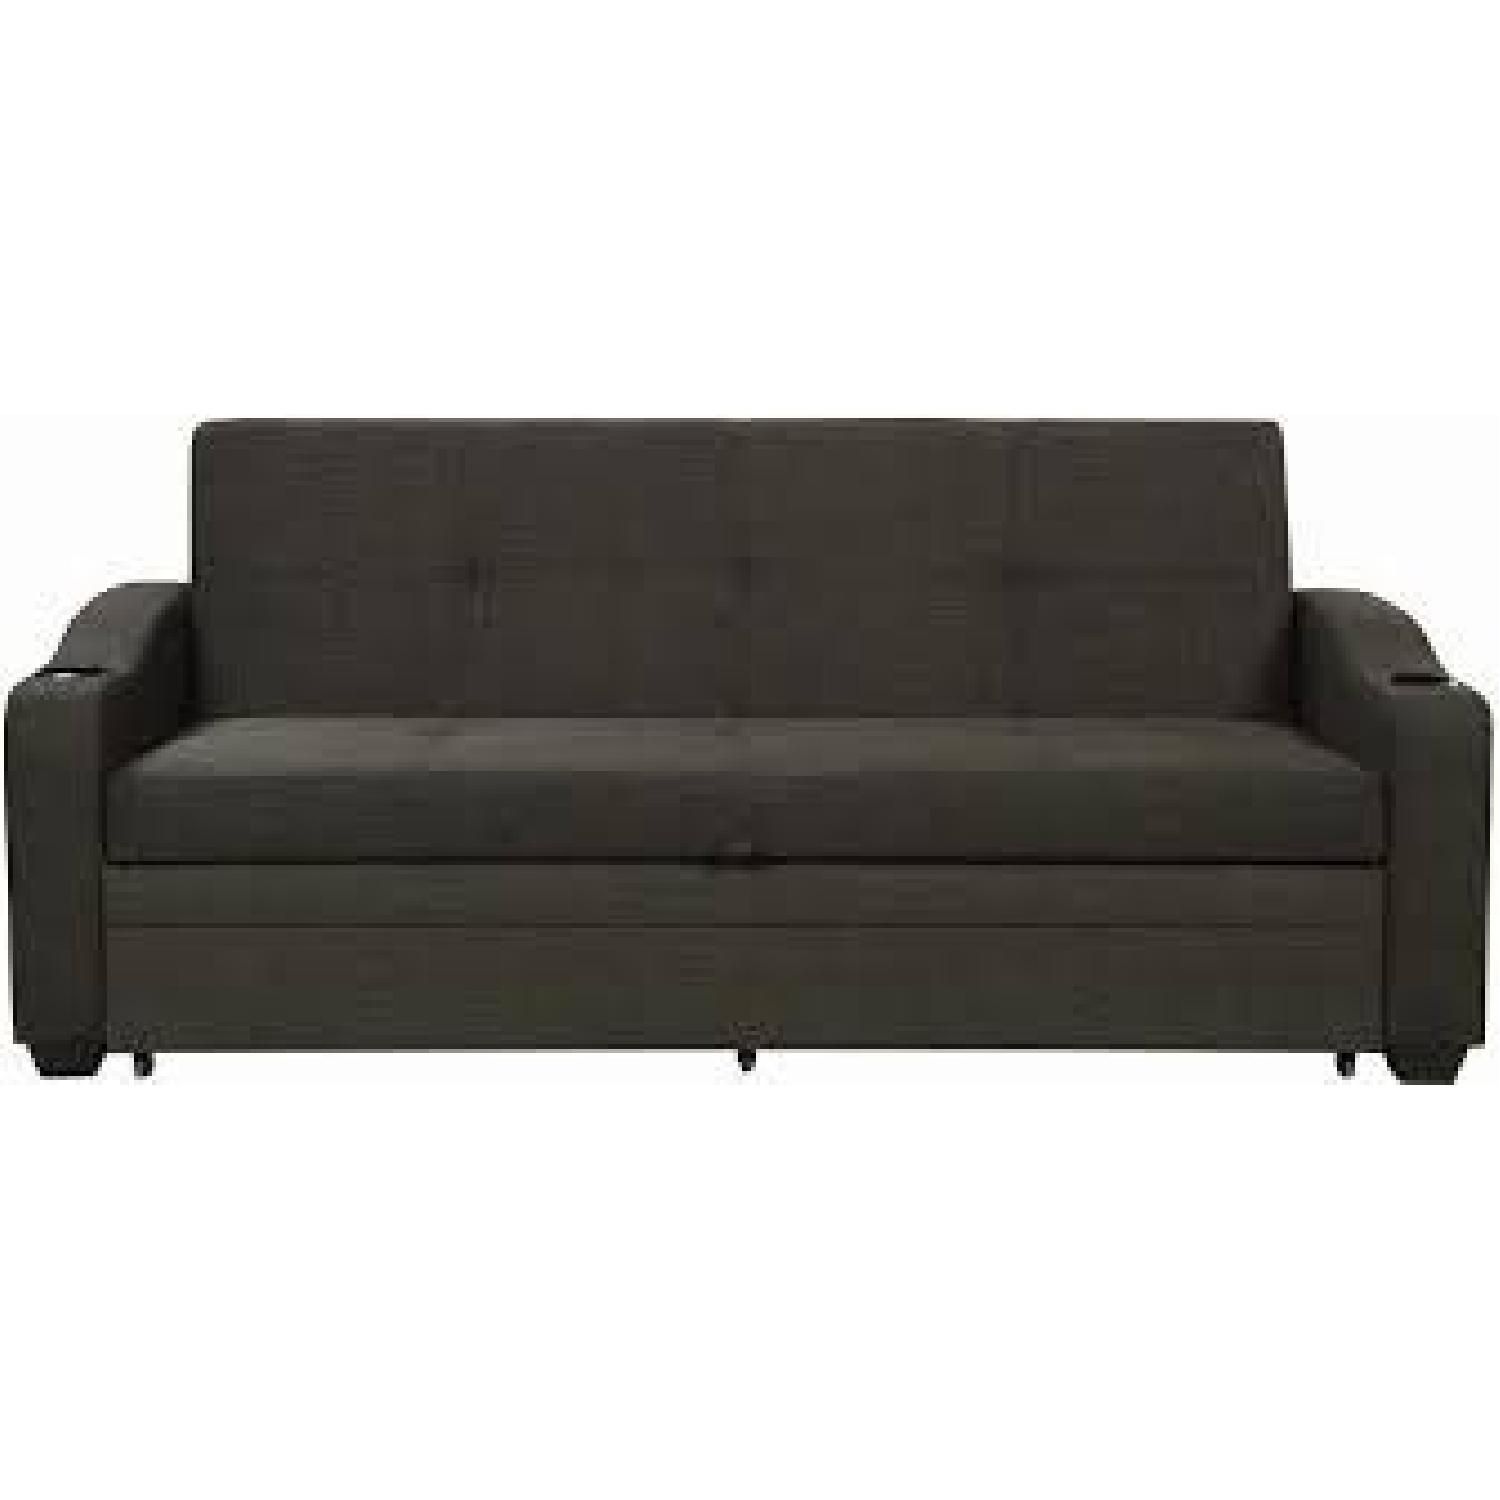 Charcoal Grey Pull Out Sleeper Sofa – Aptdeco Within 3 In 1 Gray Pull Out Sleeper Sofas (Gallery 18 of 20)